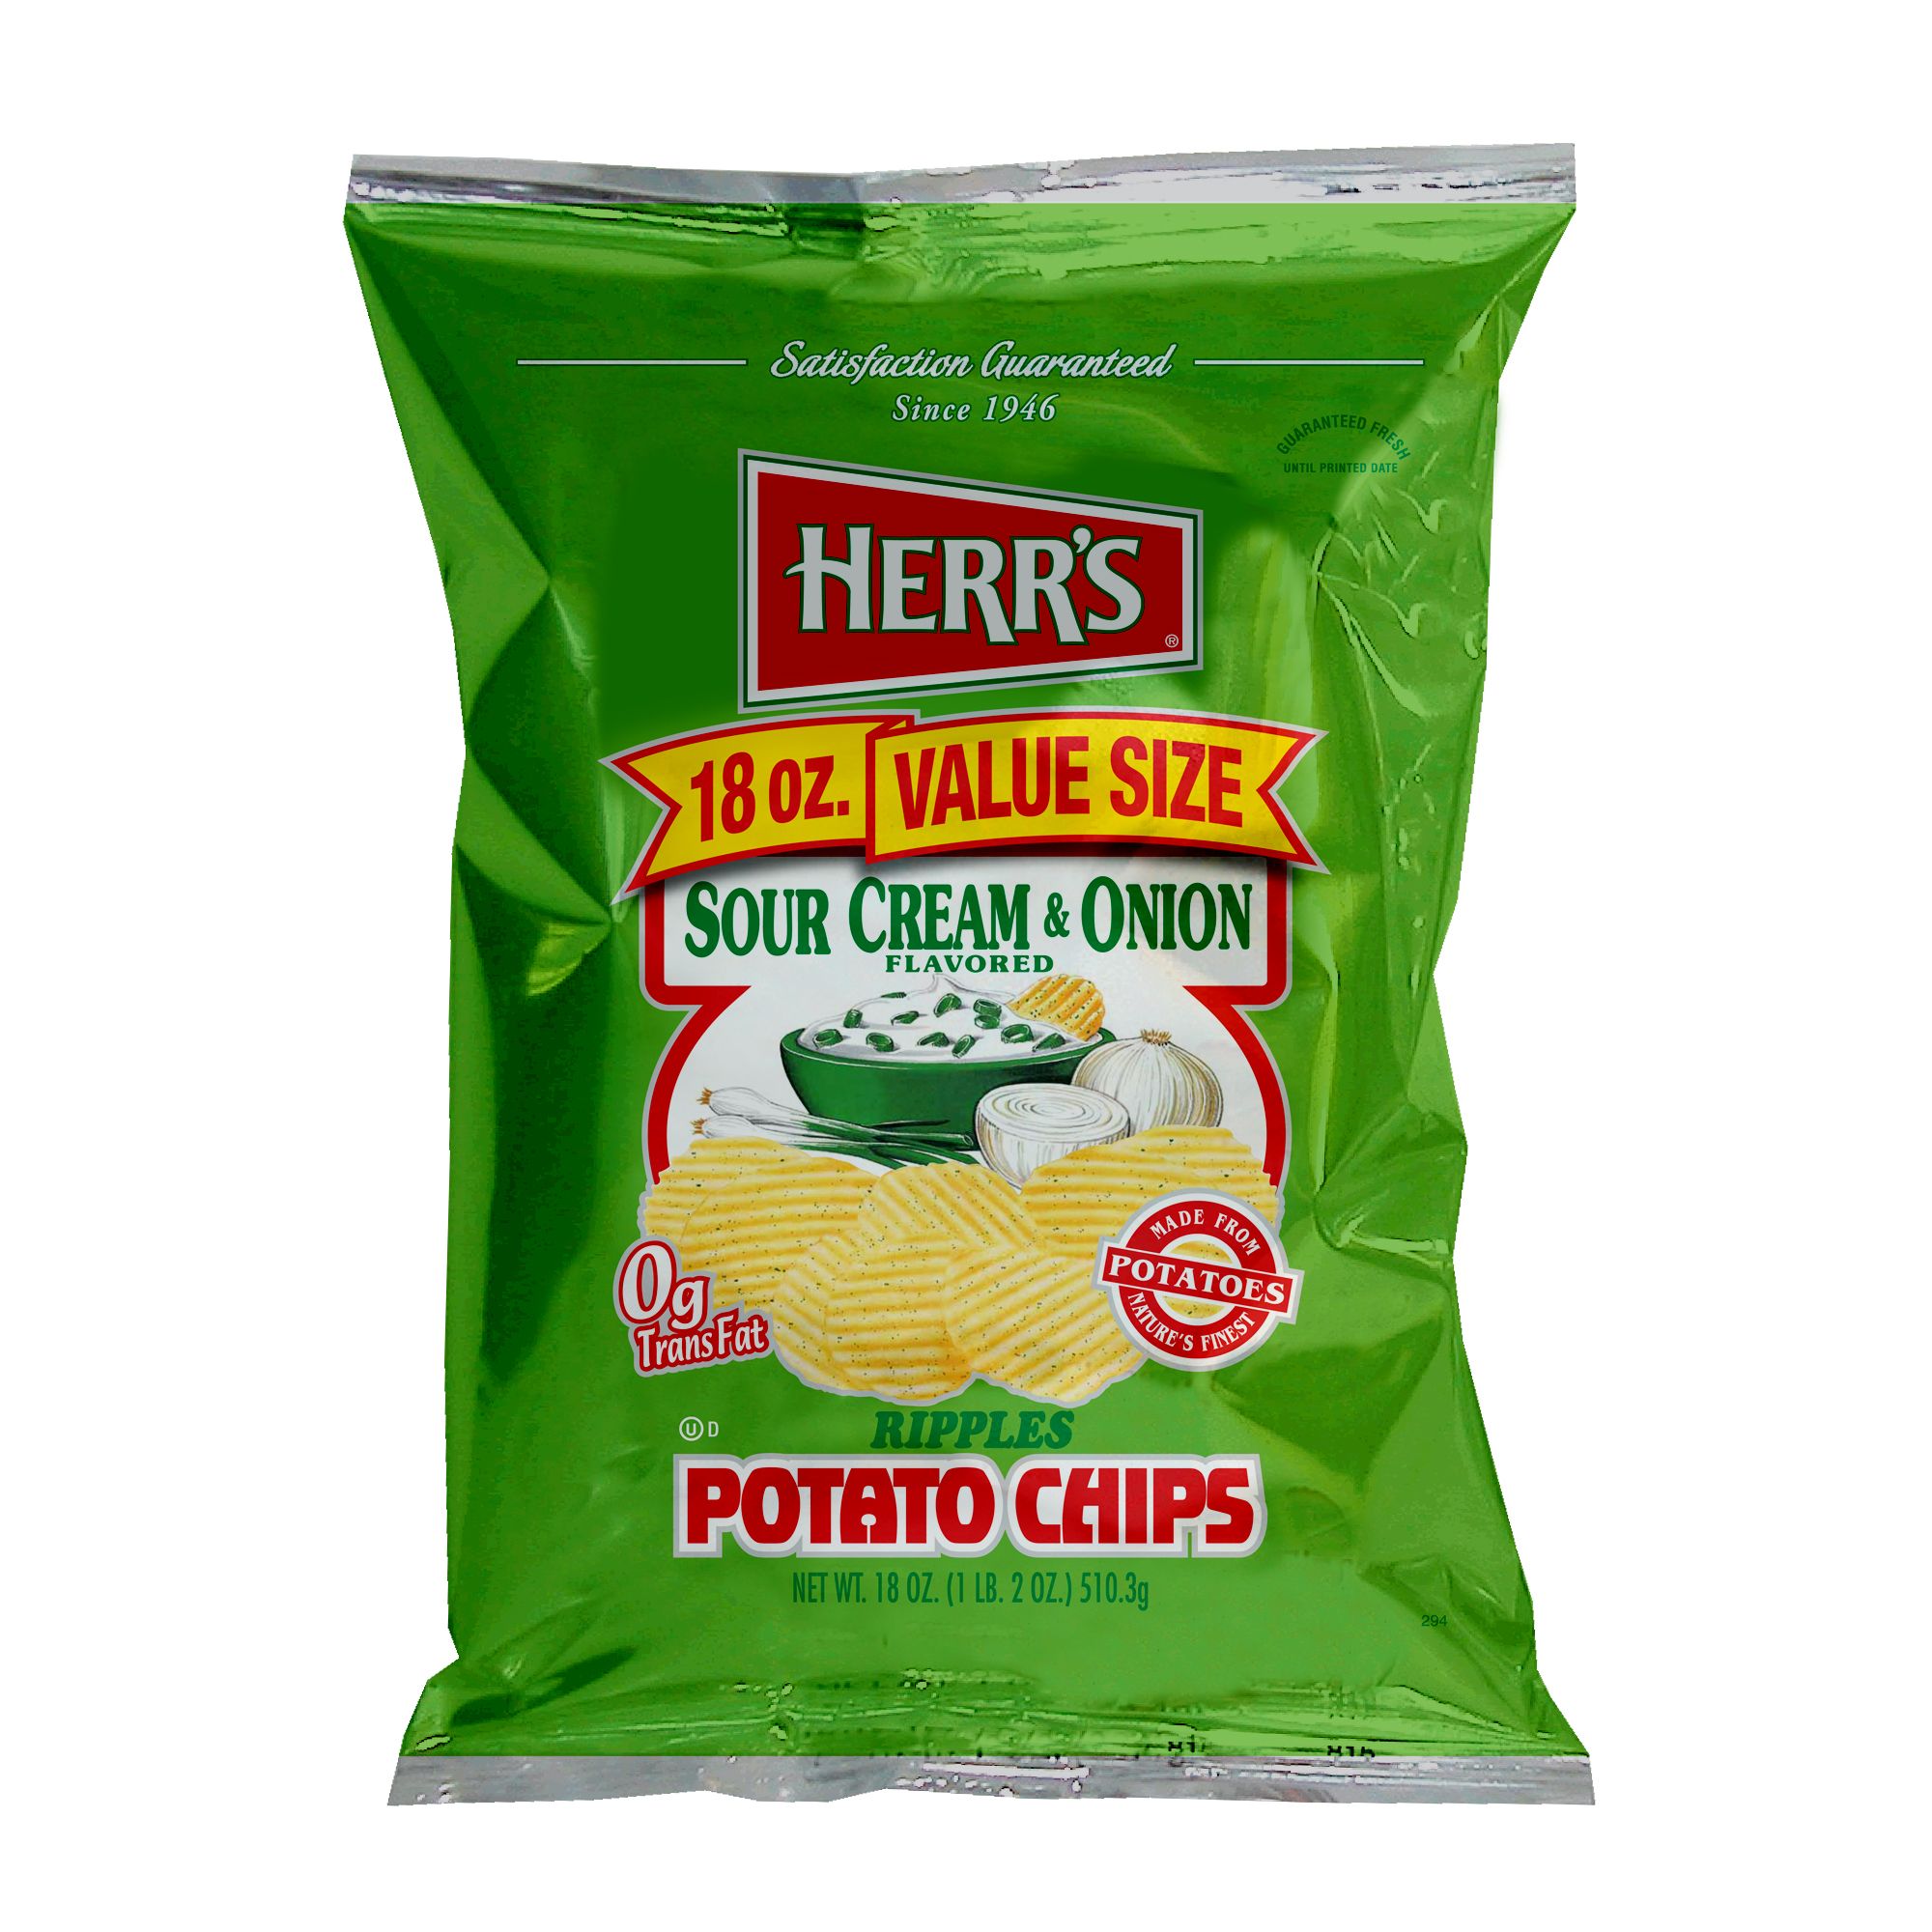 HERR'S Sour Cream & Onion Ripple Potato Chips